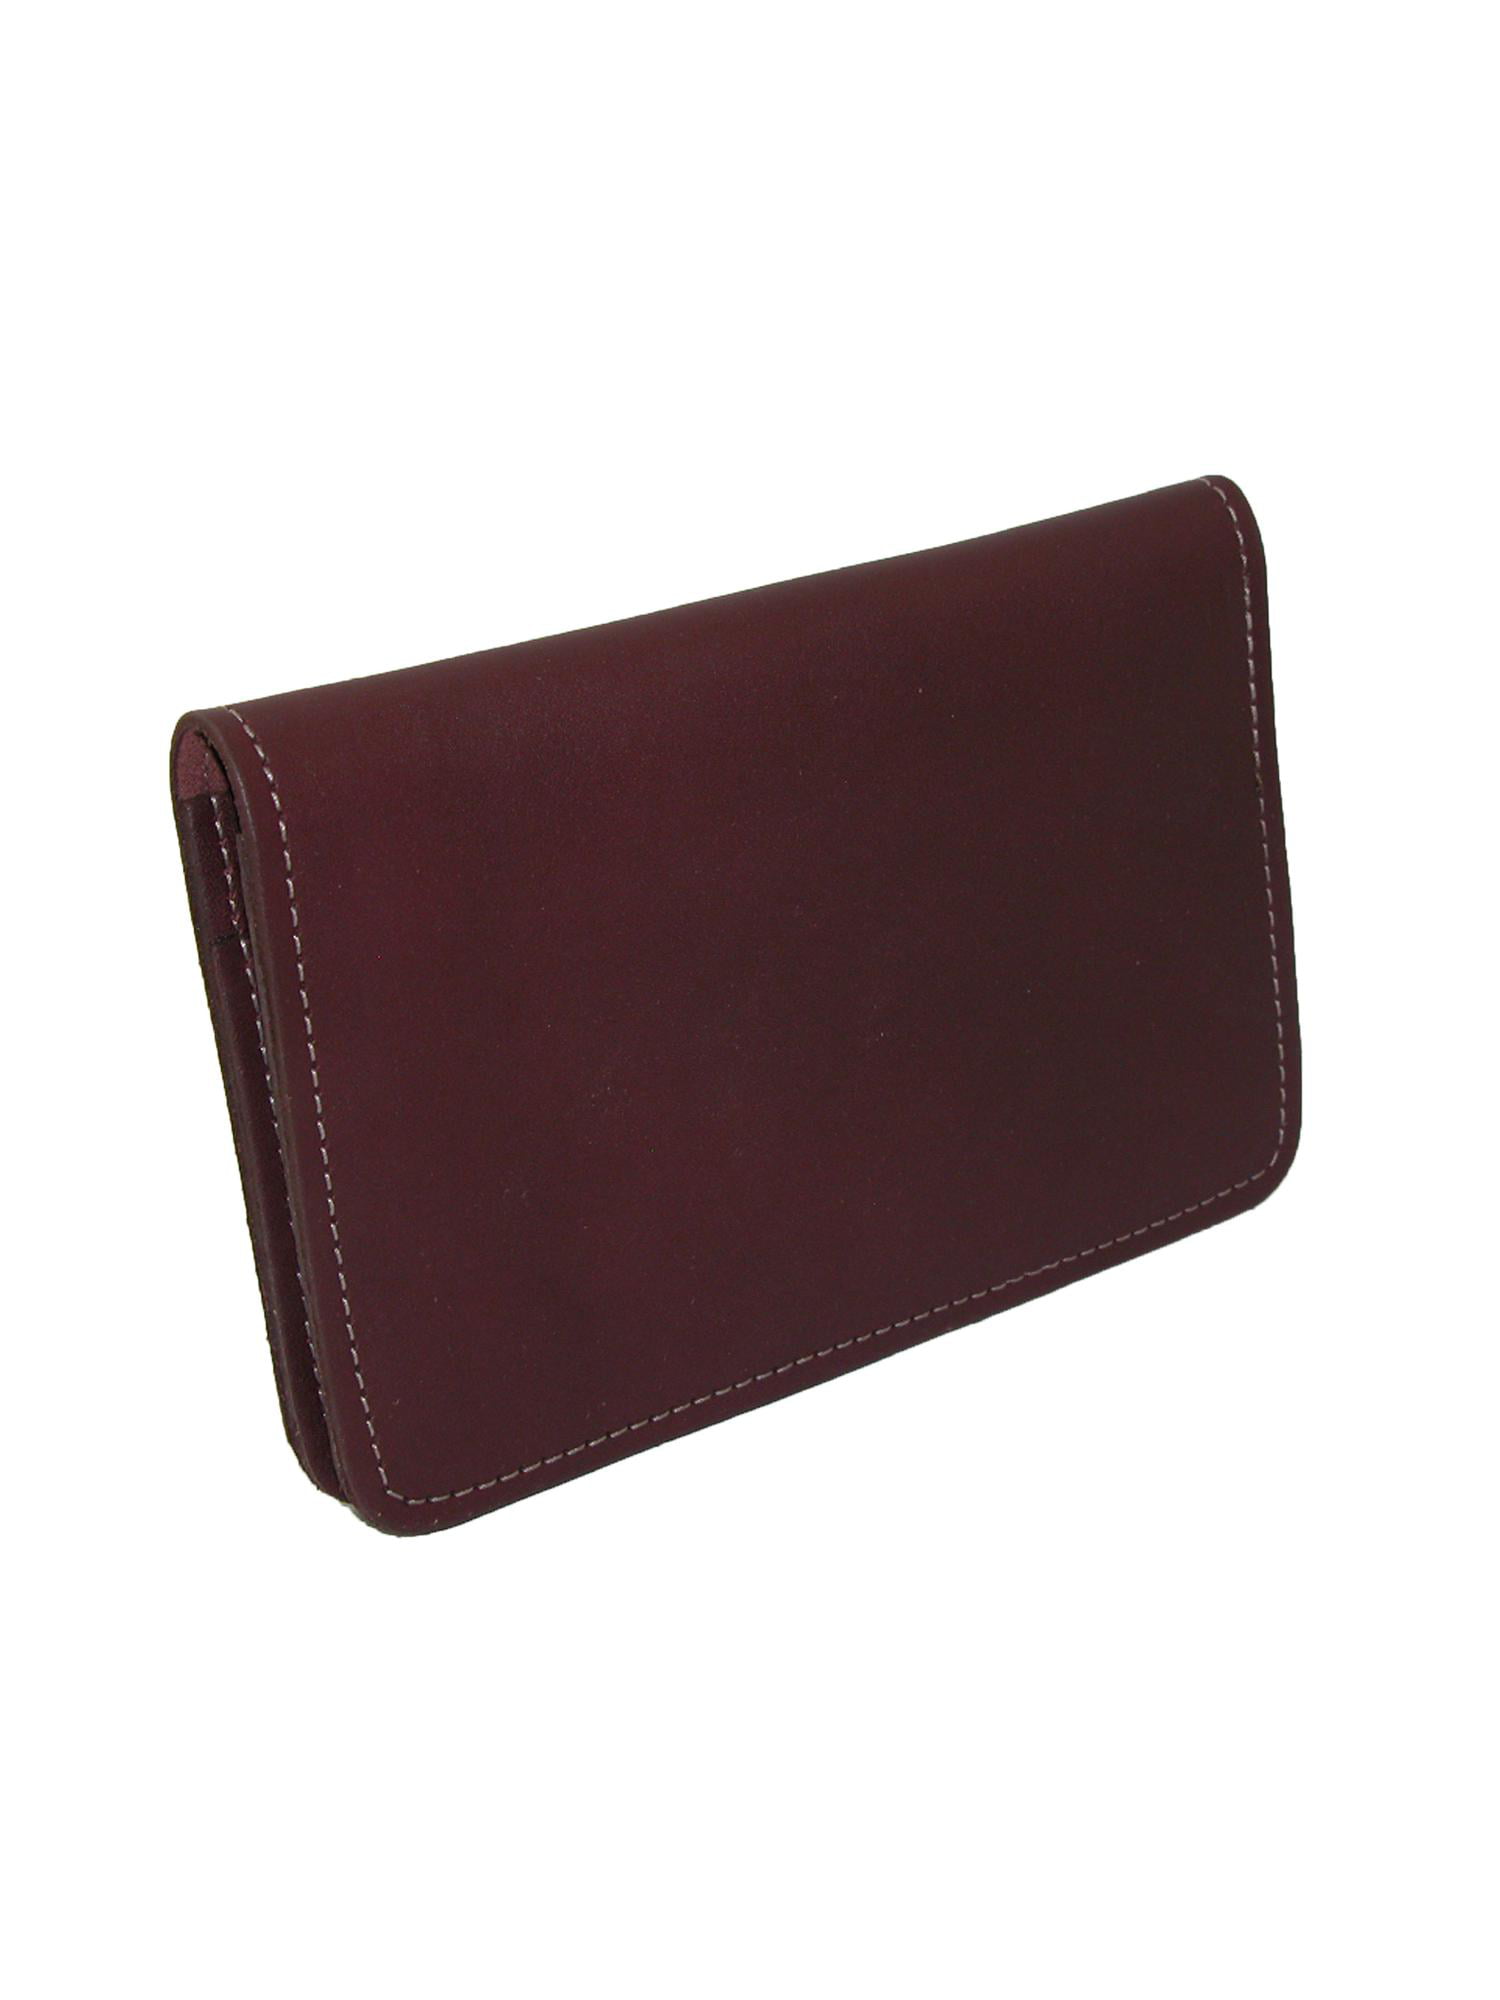 CTM Leather Deluxe Top Stub Checkbook Wallet 